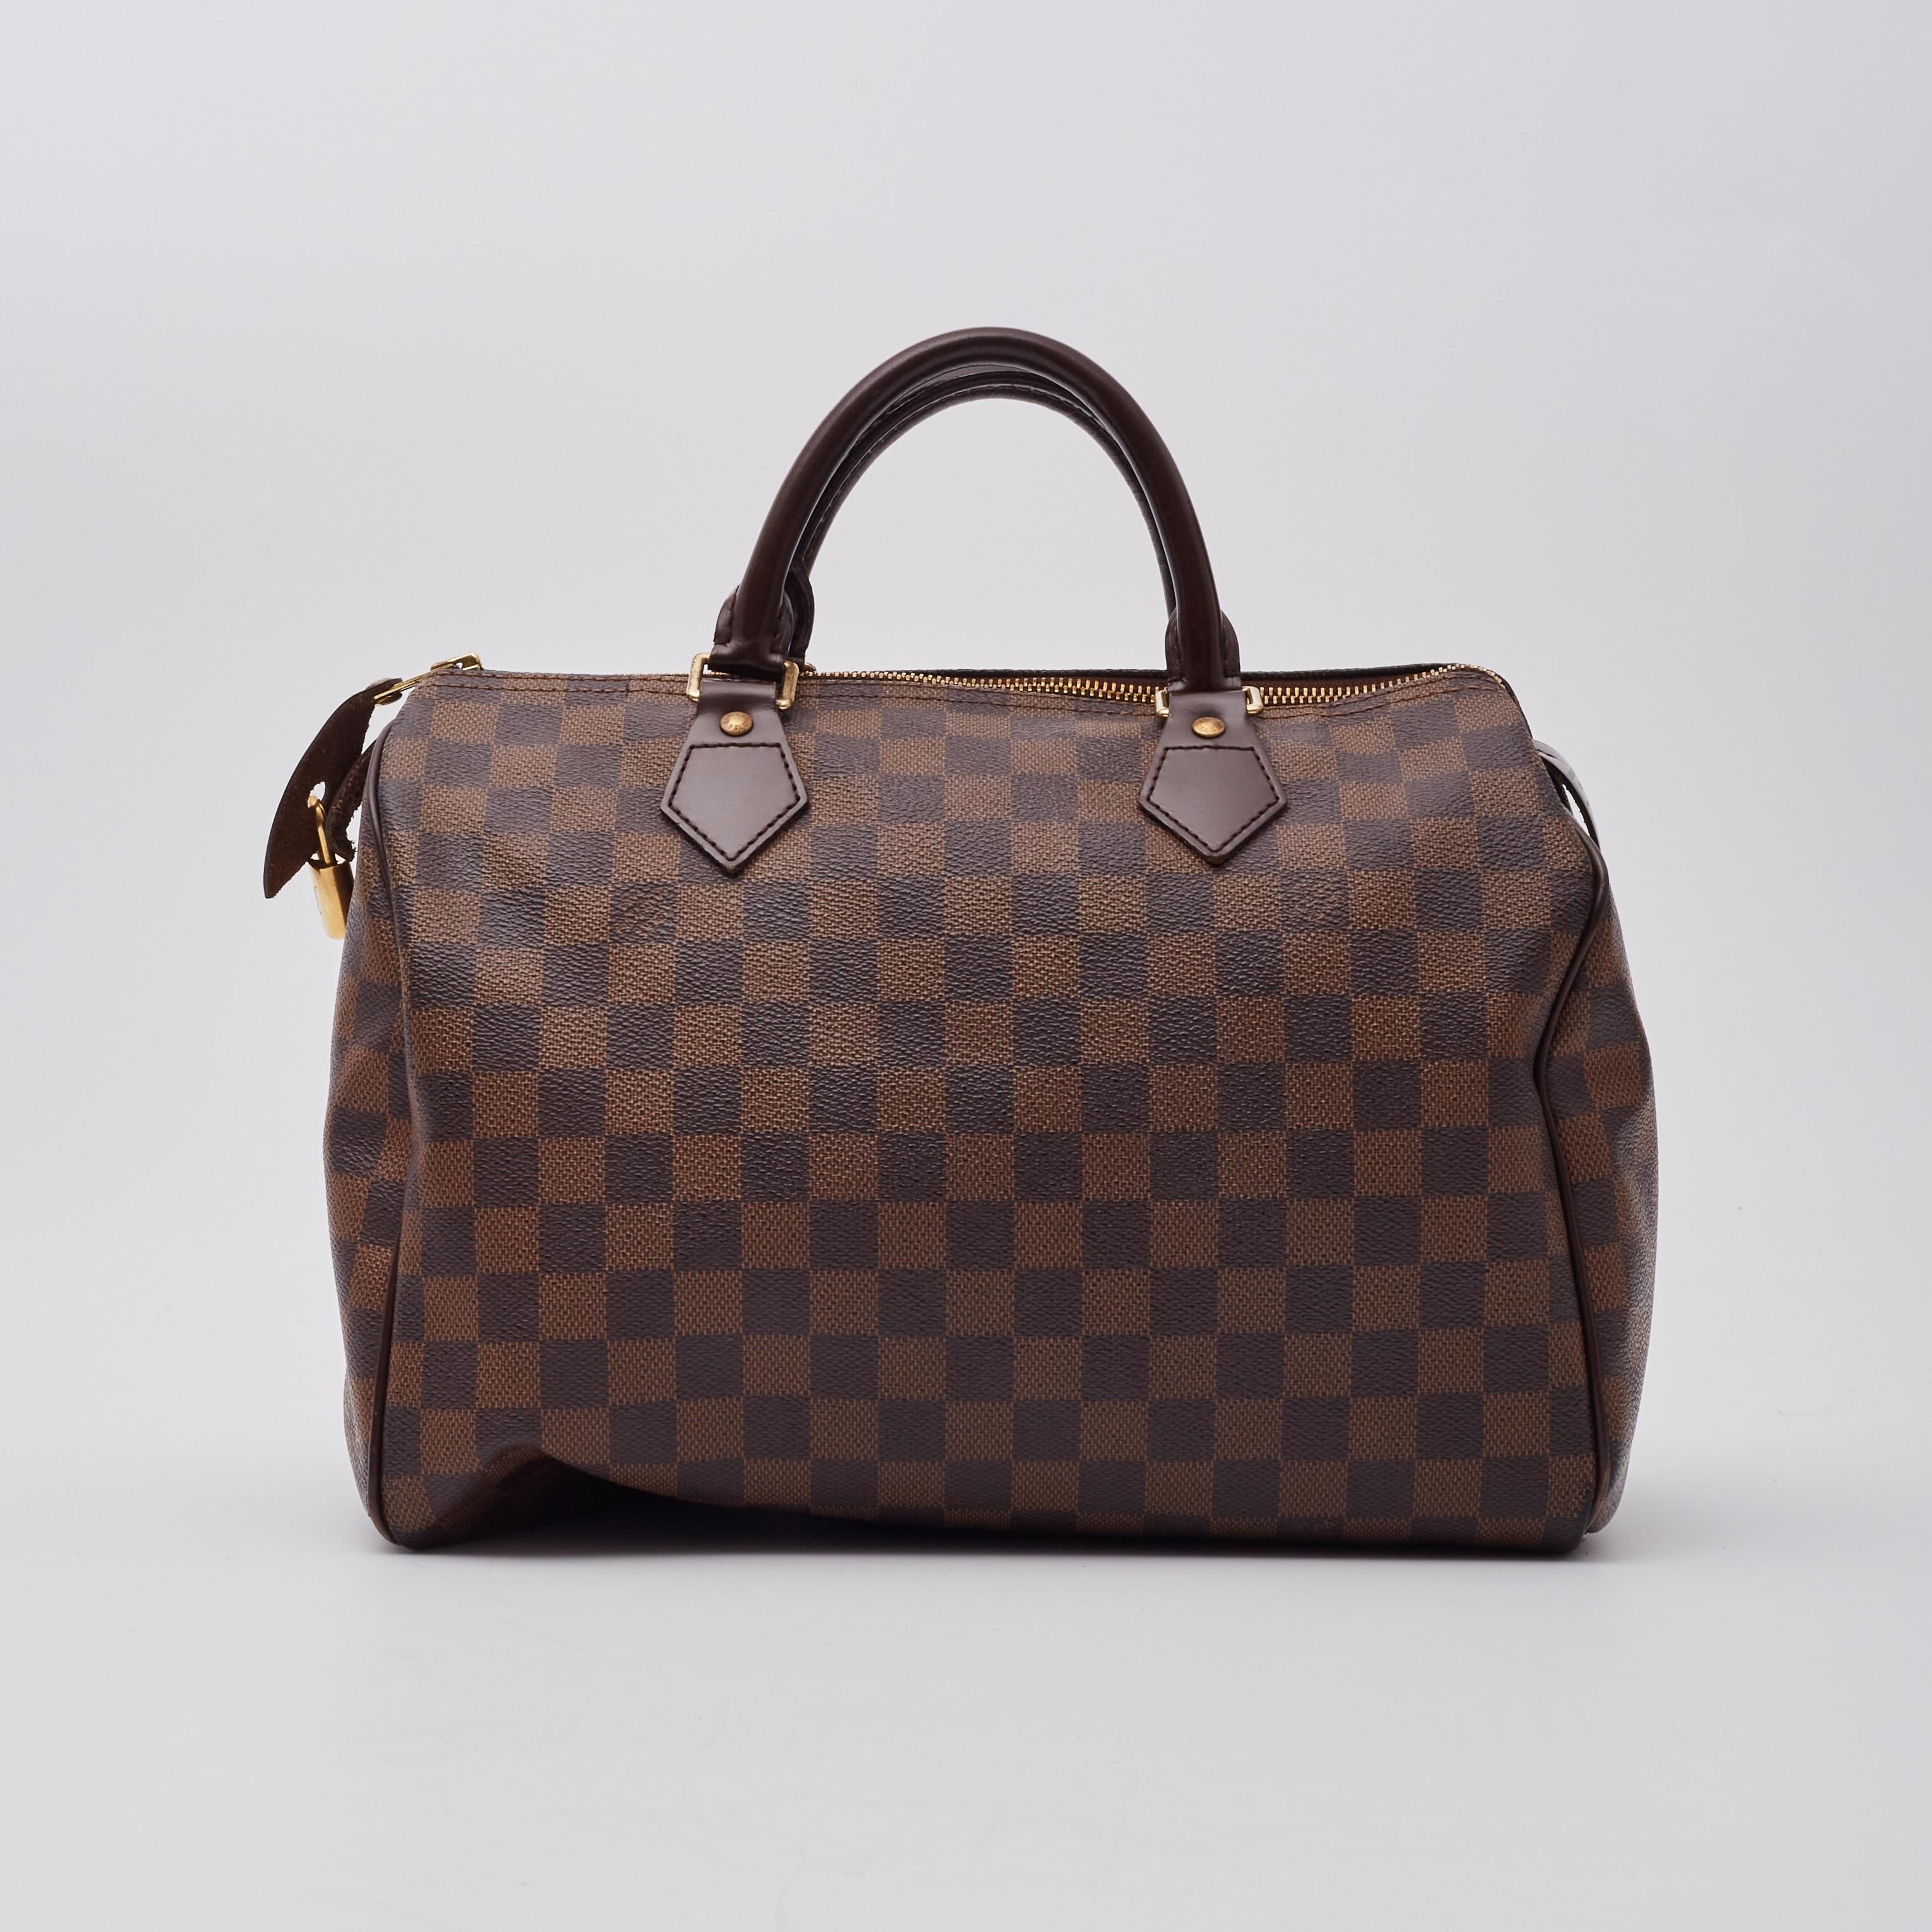 Women's Louis Vuitton Damier Ebene Speedy 30 Handbag With Strap For Sale